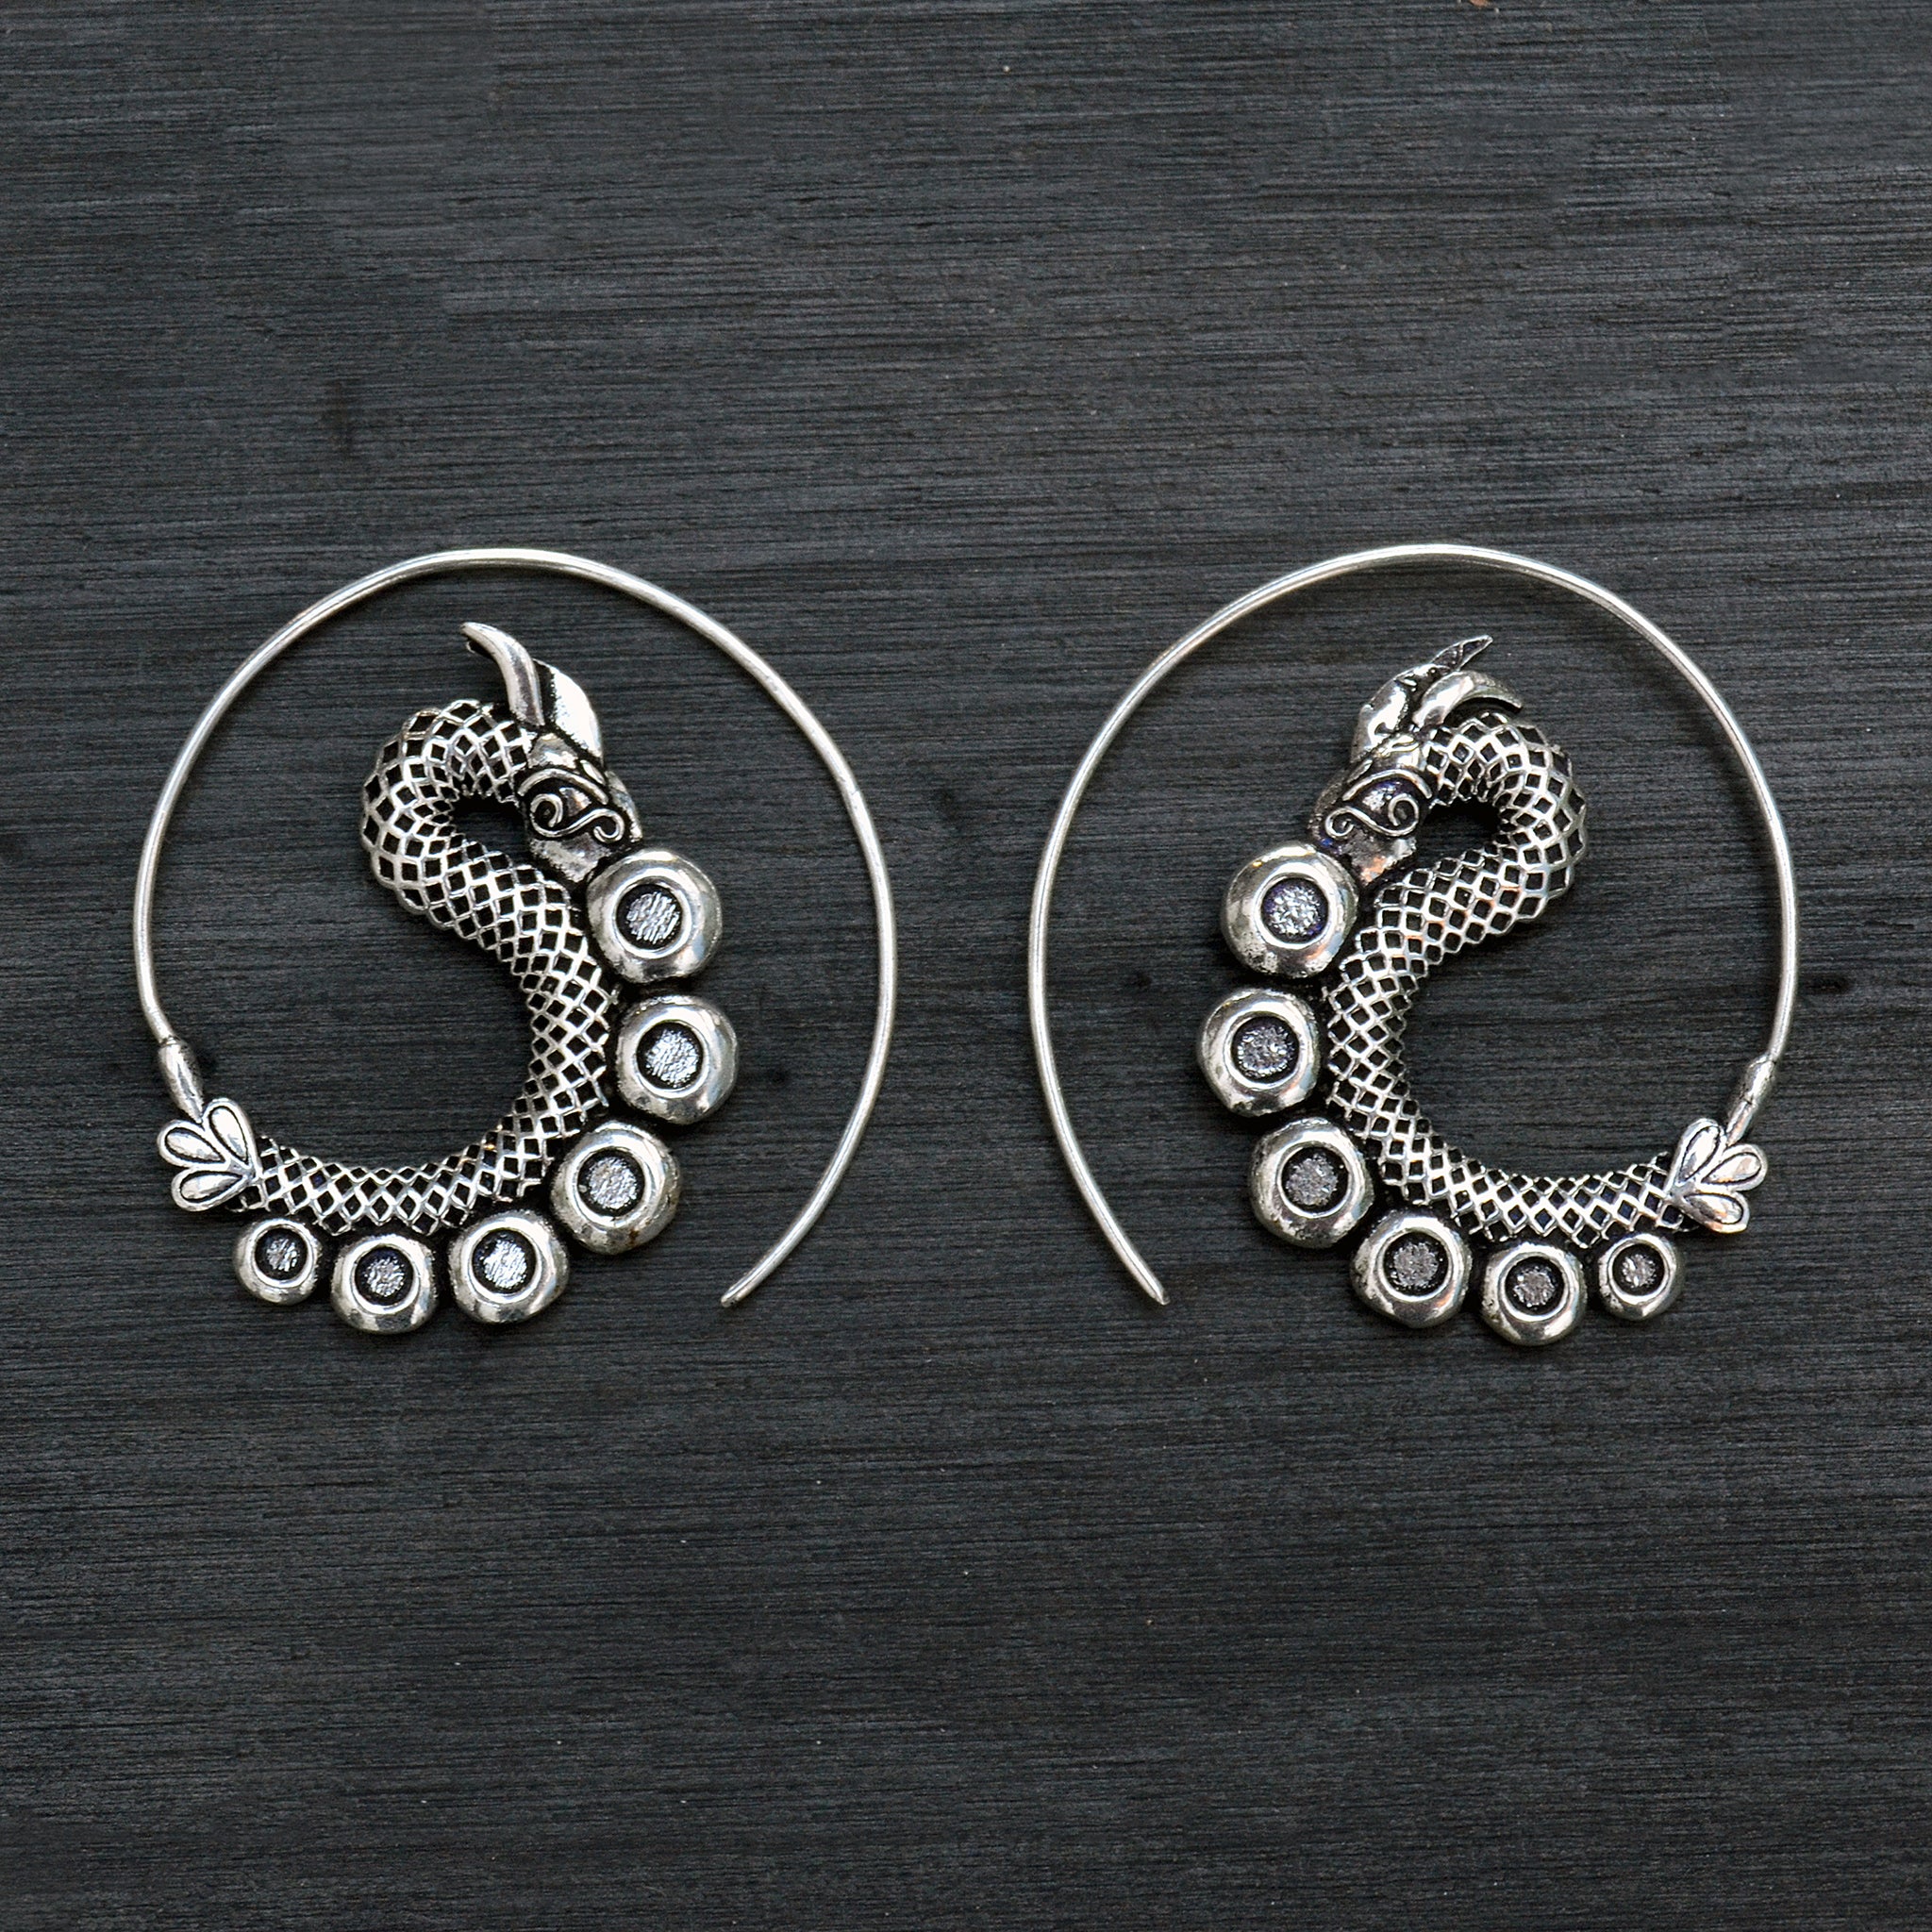 Spiral silver ethnic dagon earrings on black background